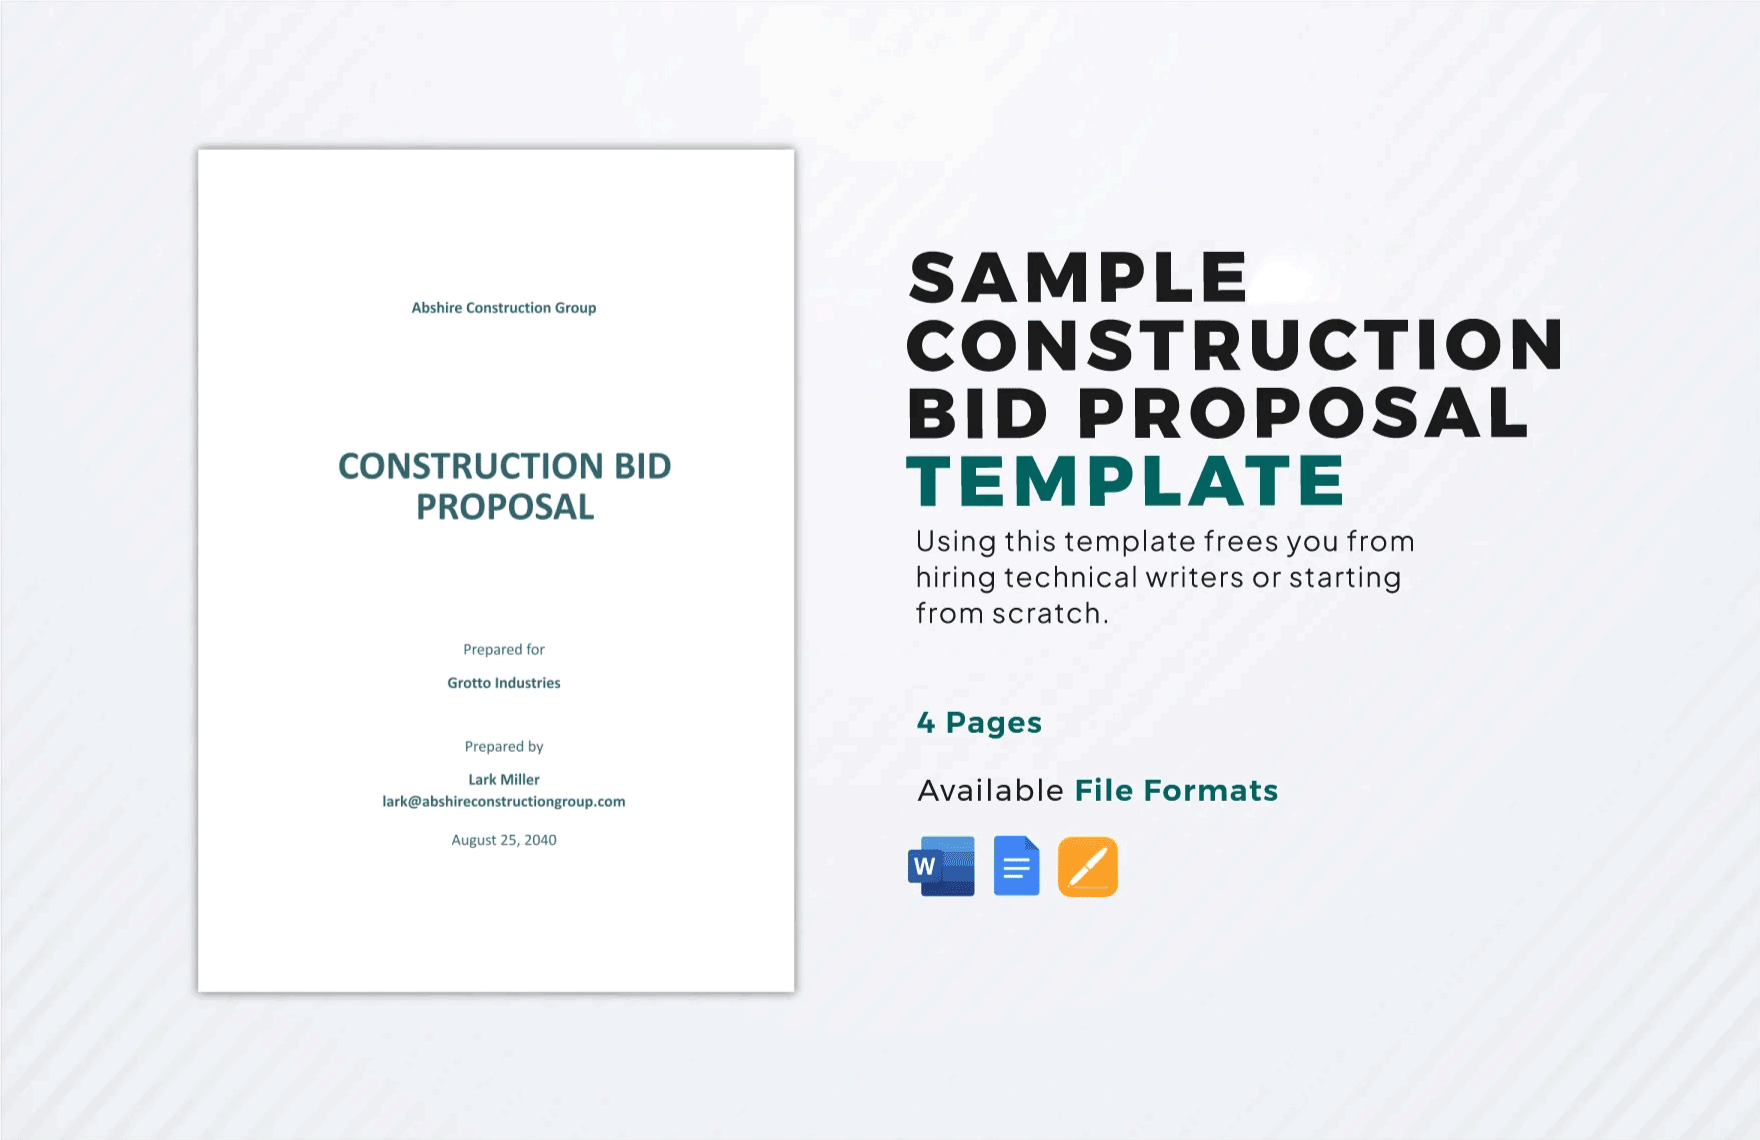 Sample Construction Bid Proposal Template